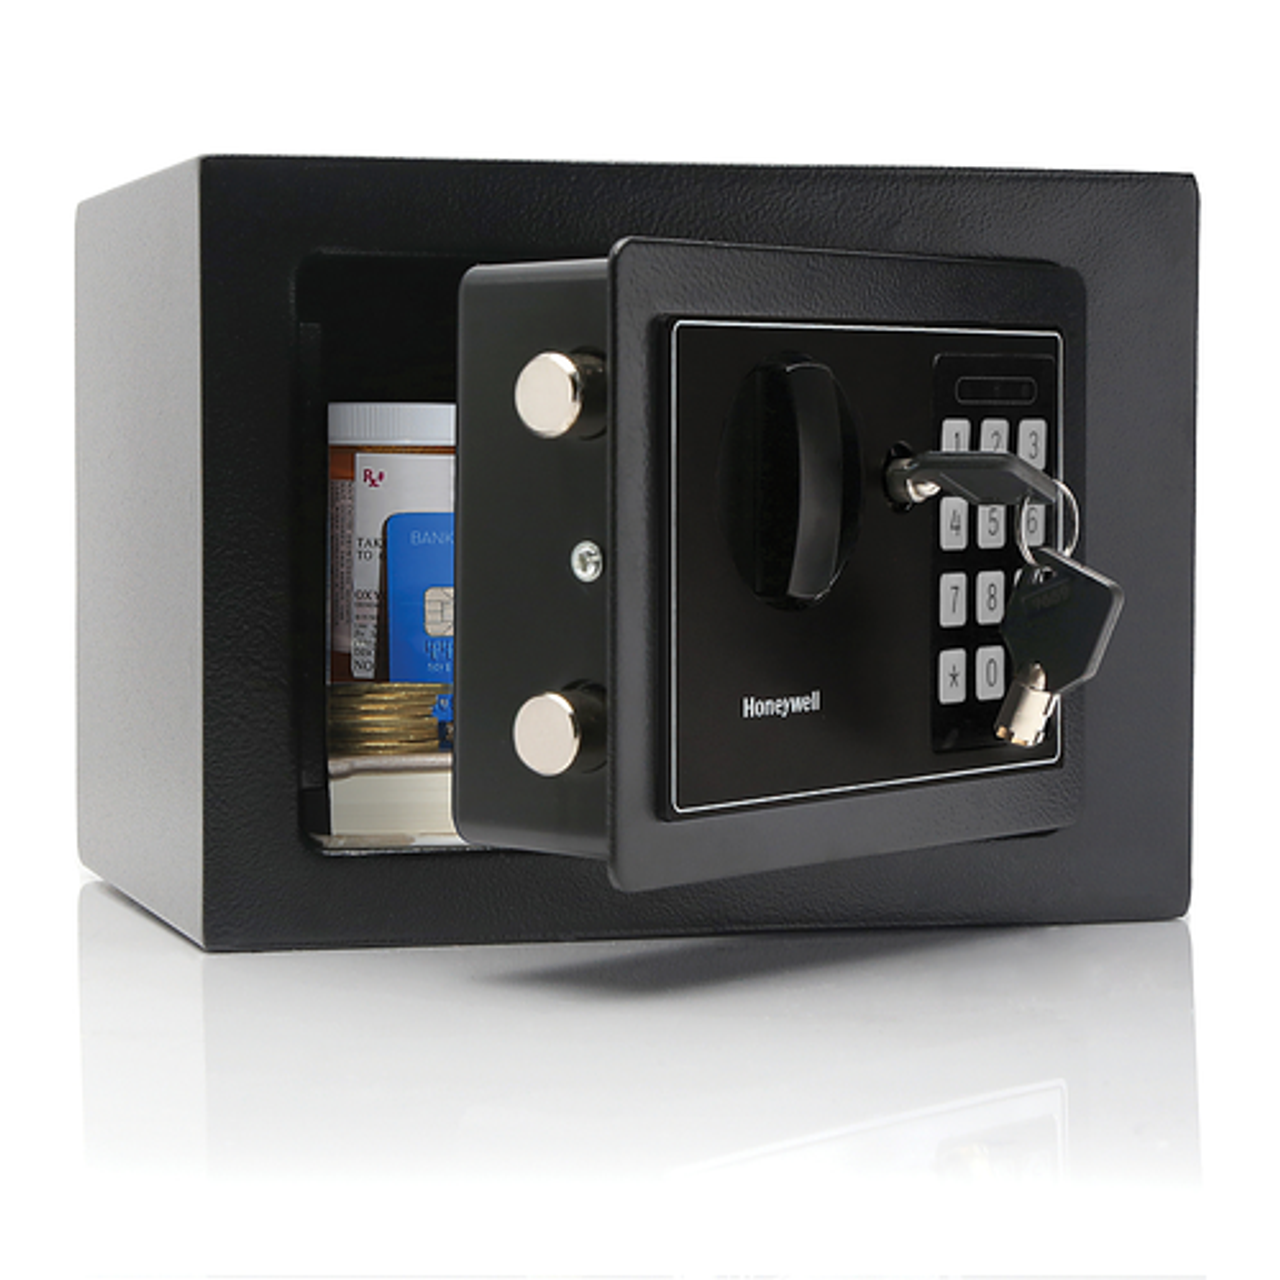 Honeywell Compact Digital Security Box .17 CU Black - black